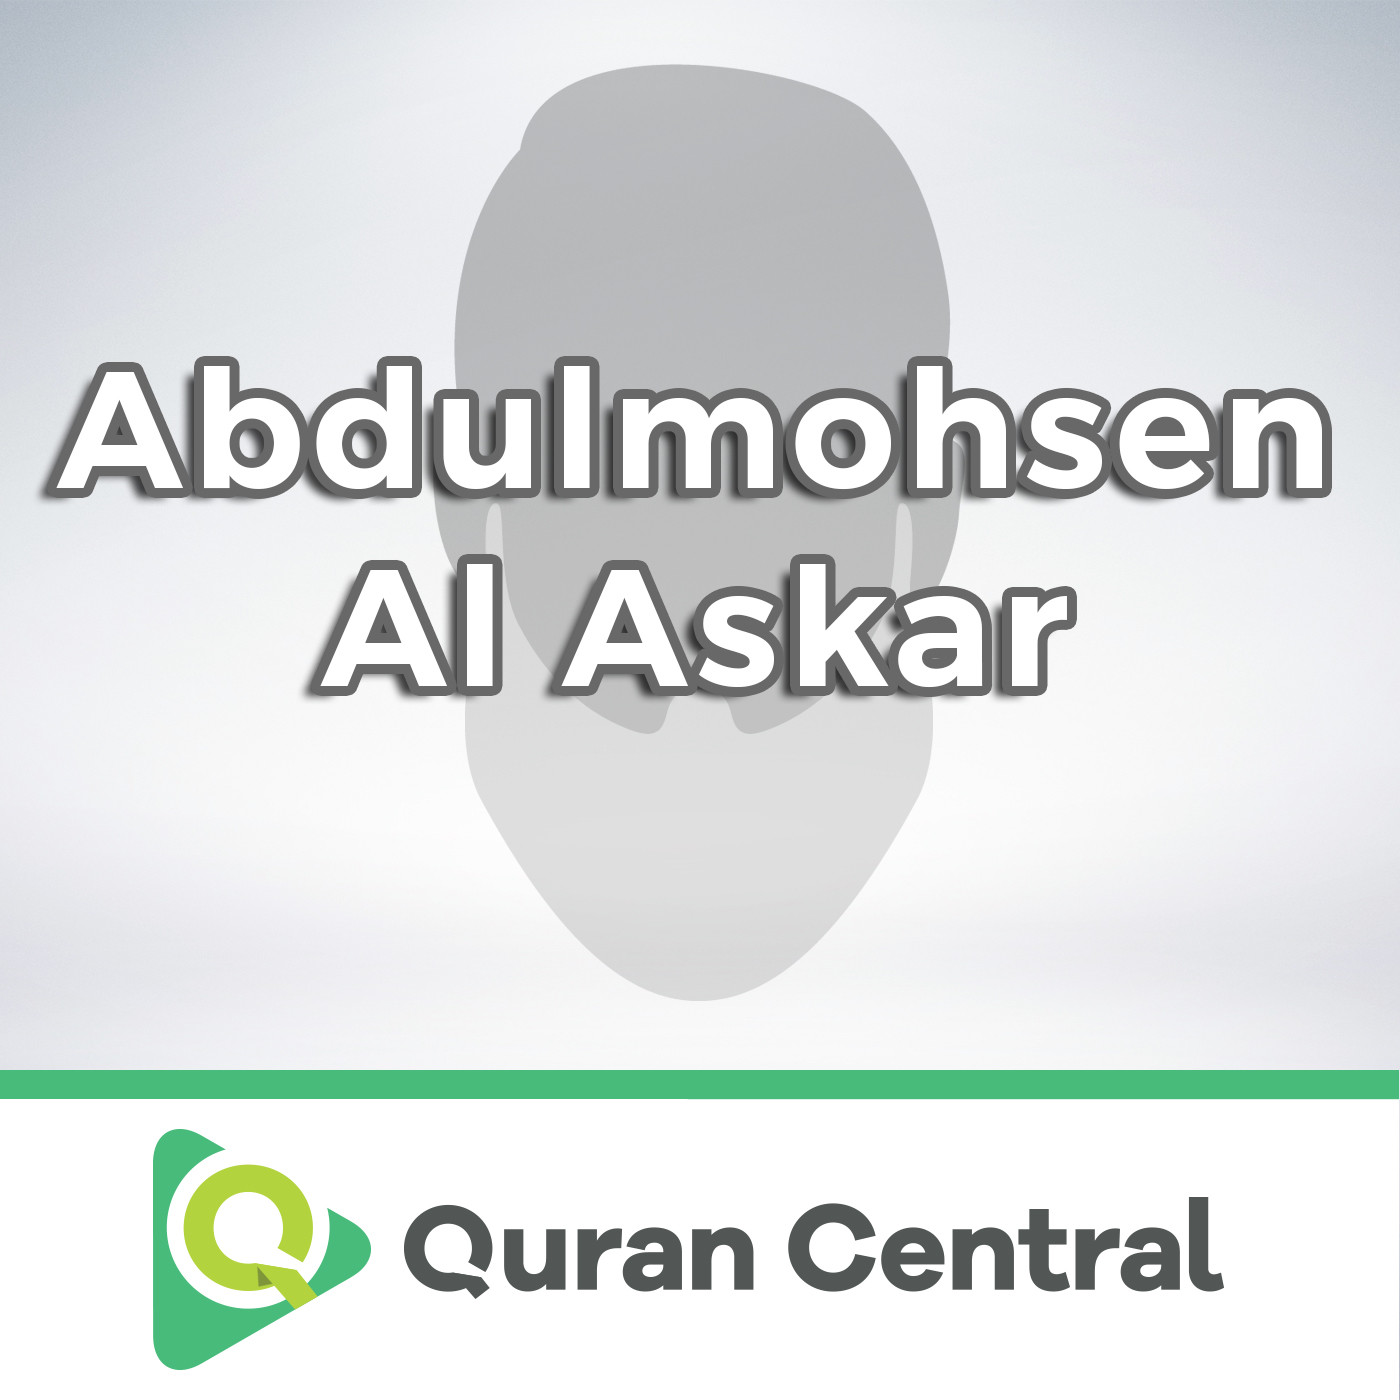 Abdulmohsen Al-Askar